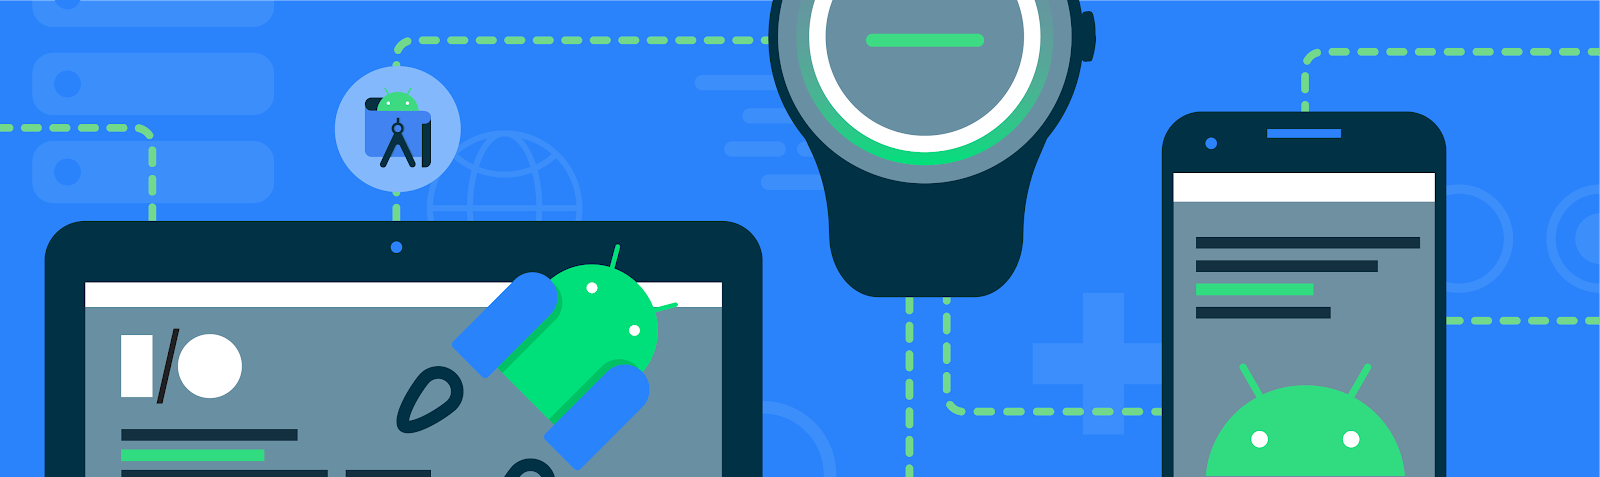 Android I/O Updates: Jetpack, Wear OS, etc.